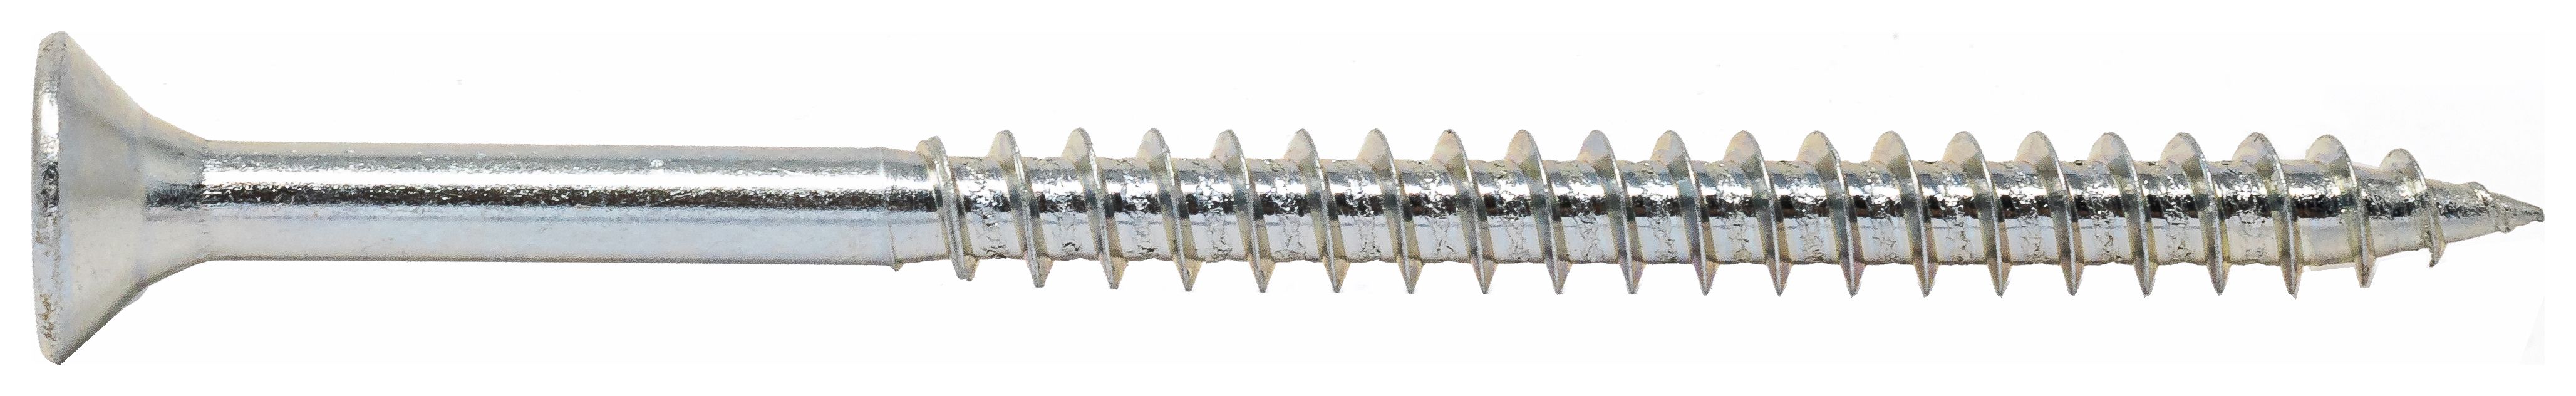 Wickes Single Thread Zinc Plated Screw - 3 X 16mm Pack Of 200